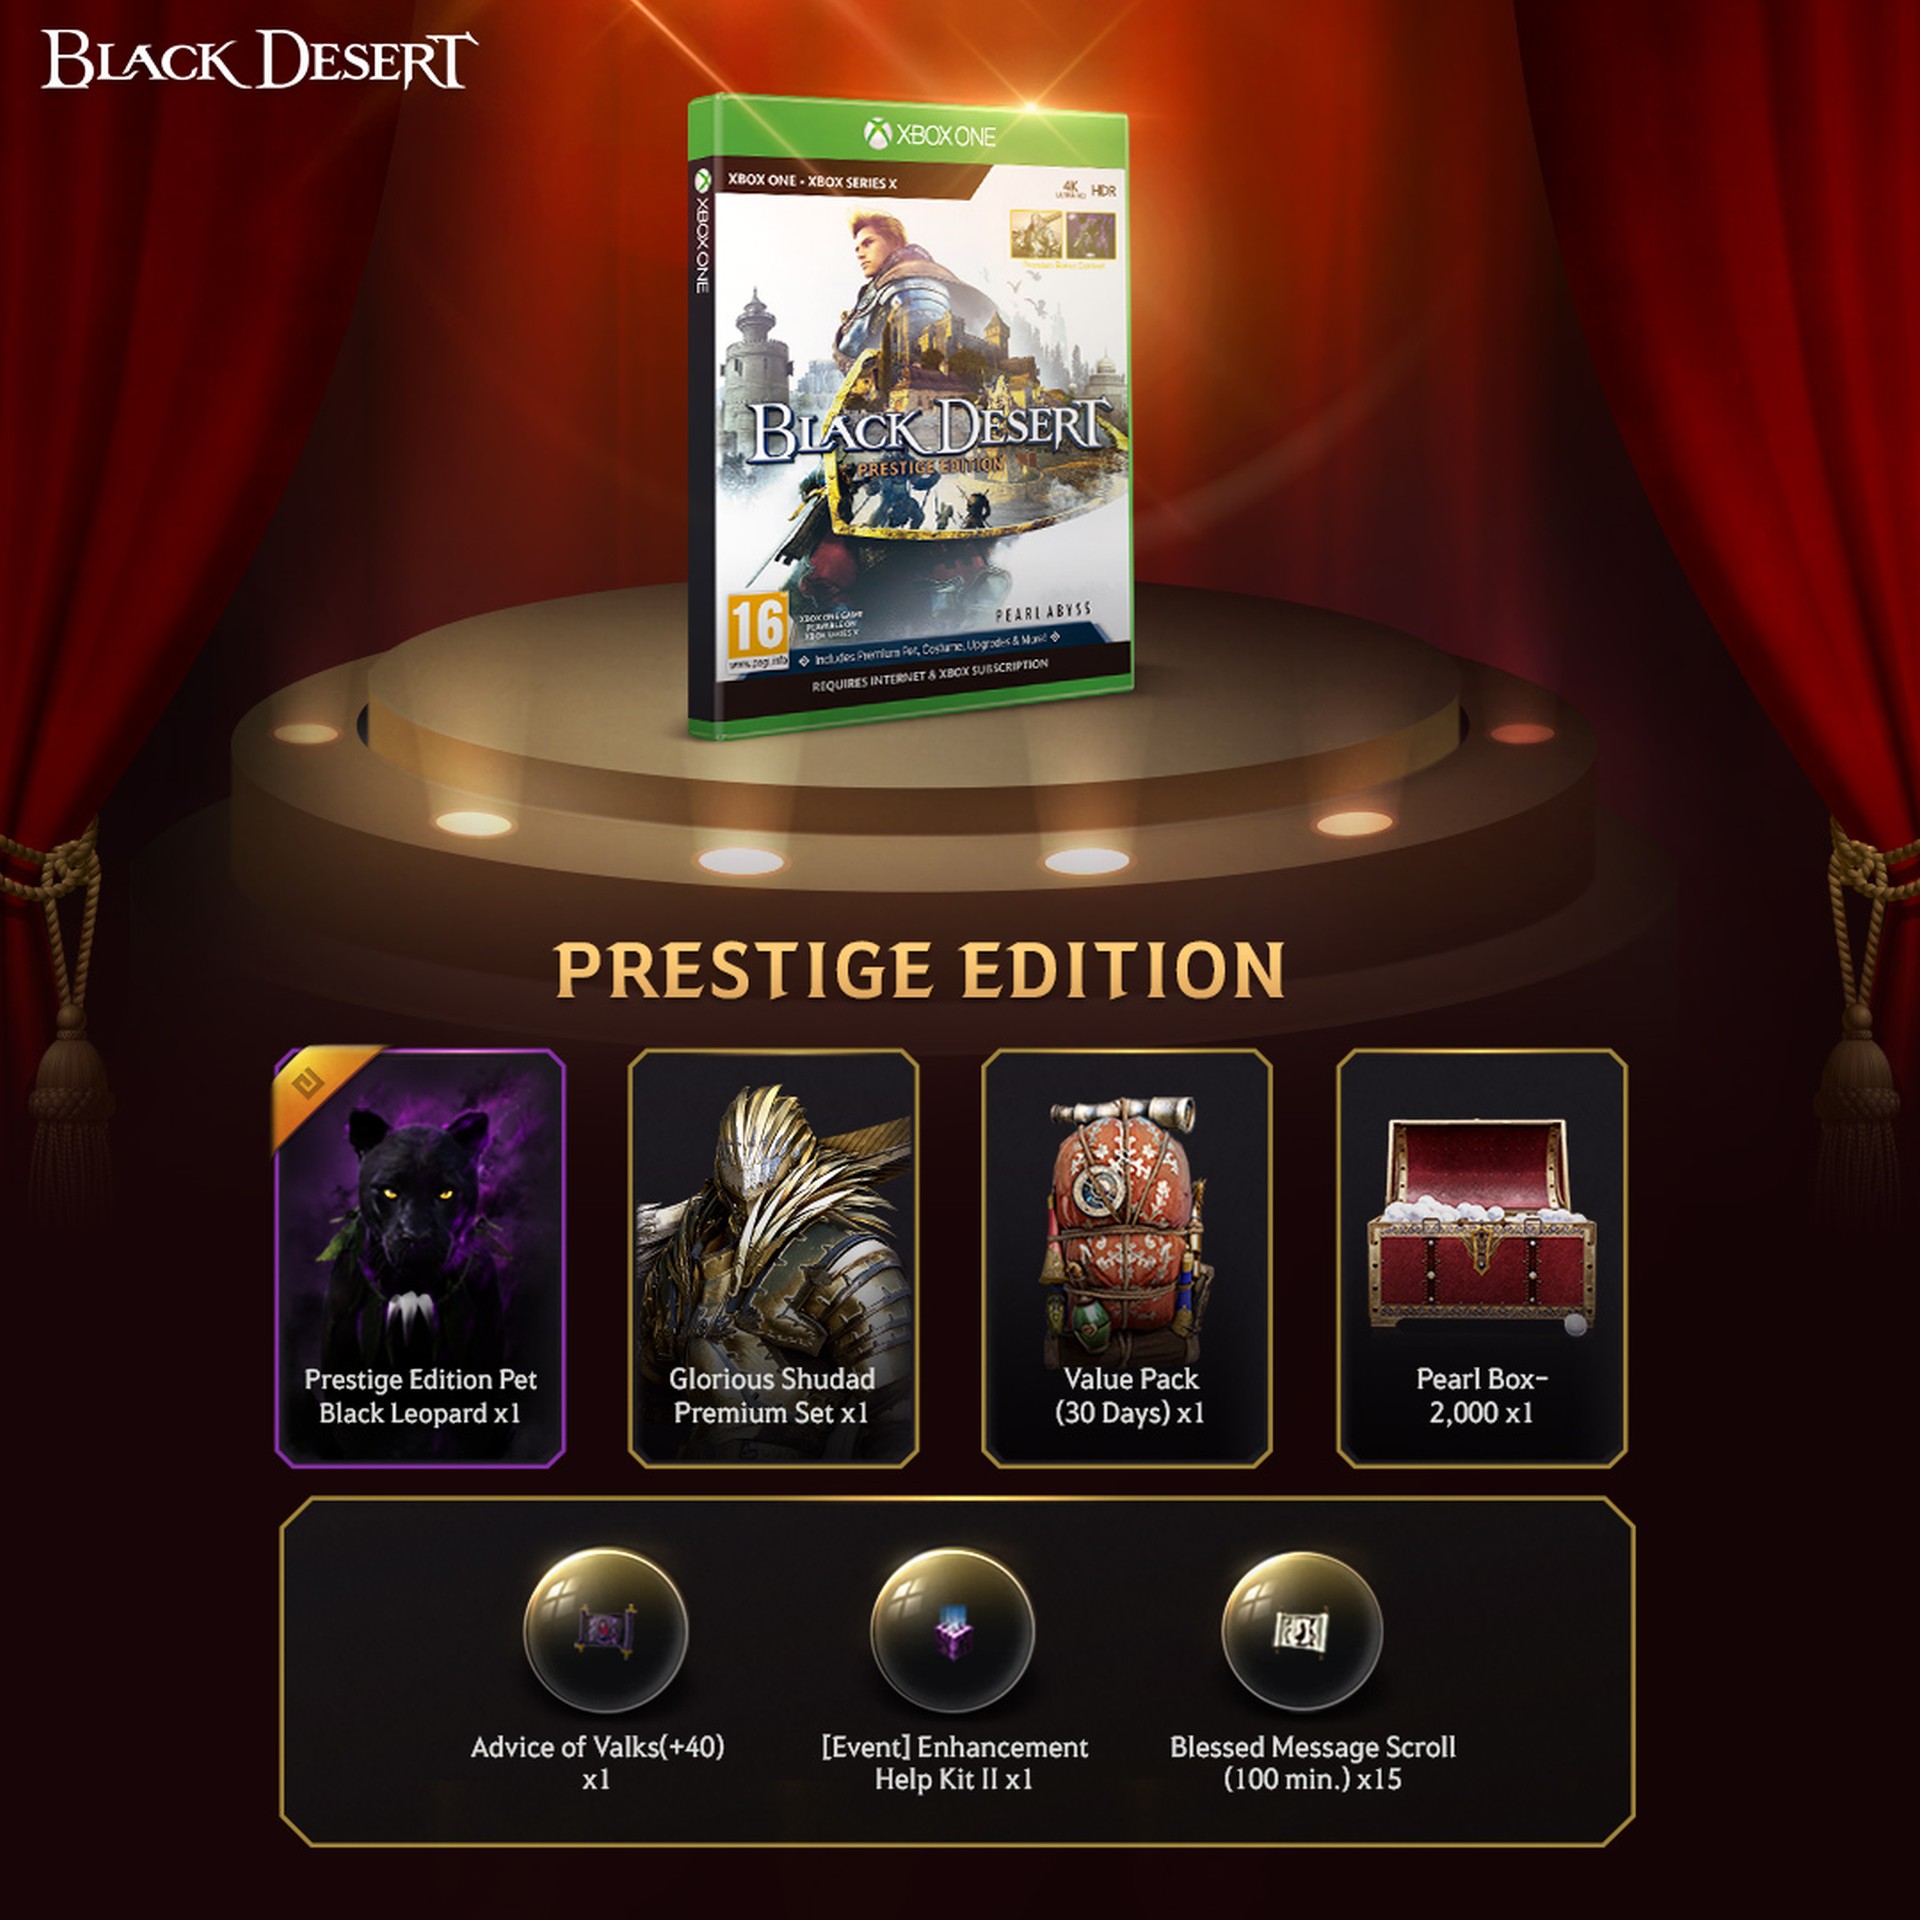 Black Desert: The Prestige Edition